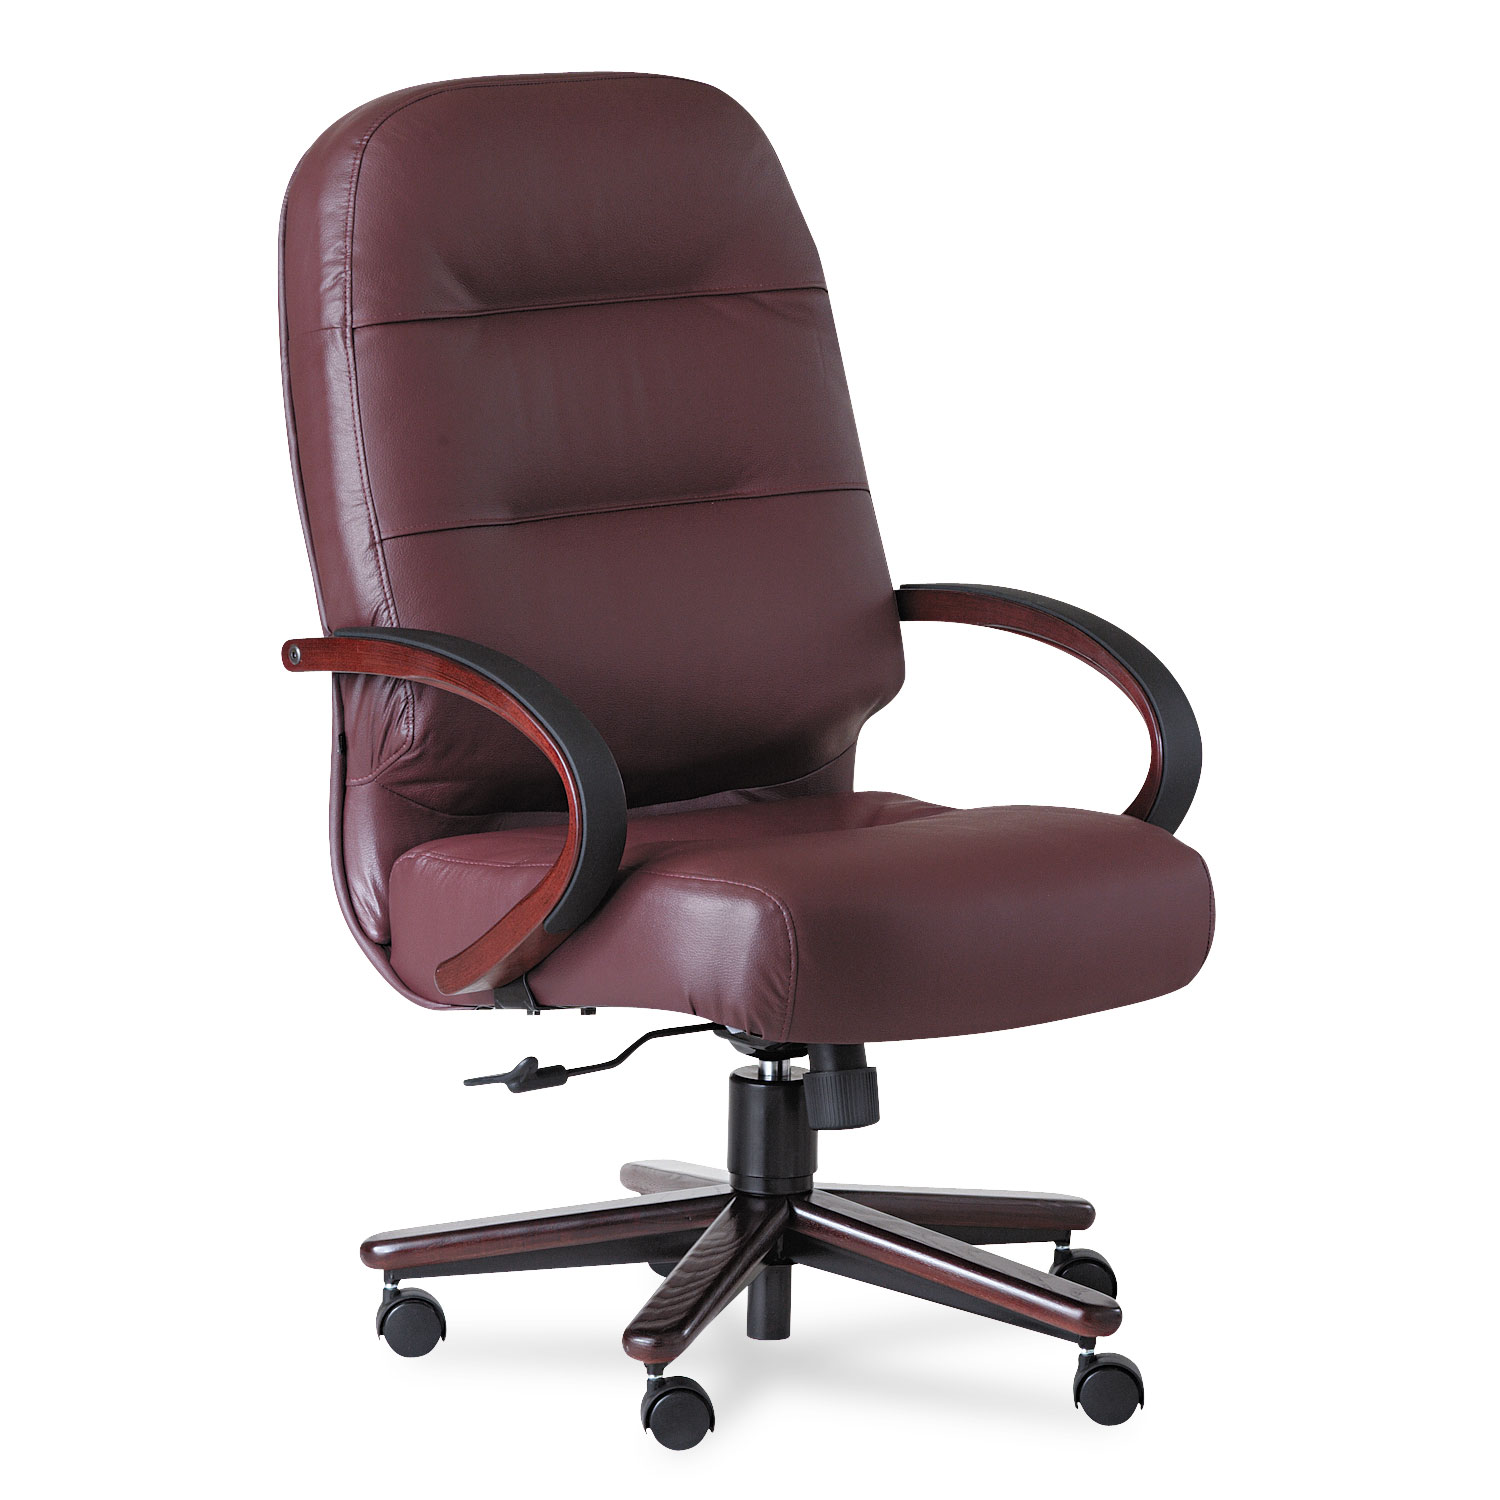  HON H2191.N.SR69 Pillow-Soft 2190 Series Executive High-Back Chair, Supports up to 250 lbs., Burgundy Seat/Burgundy Back, Mahogany Base (HON2191NSR69) 